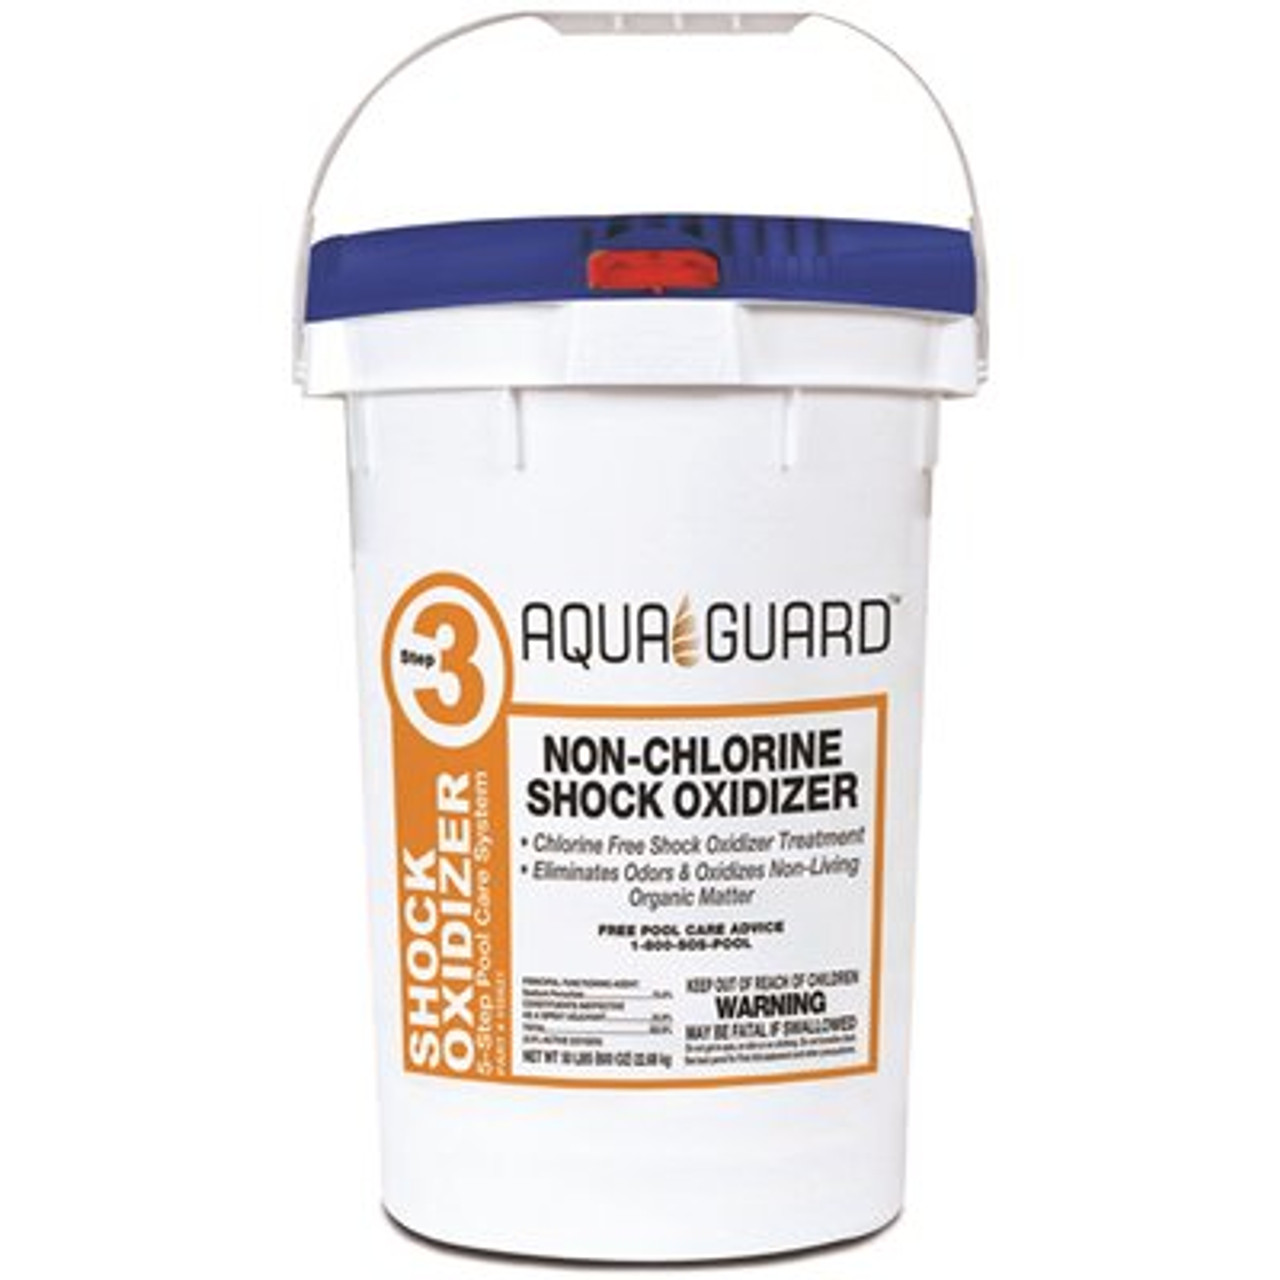 AQUAGUARD 50 lbs. Non-Chlorine Shock Oxidizer Pool Shock